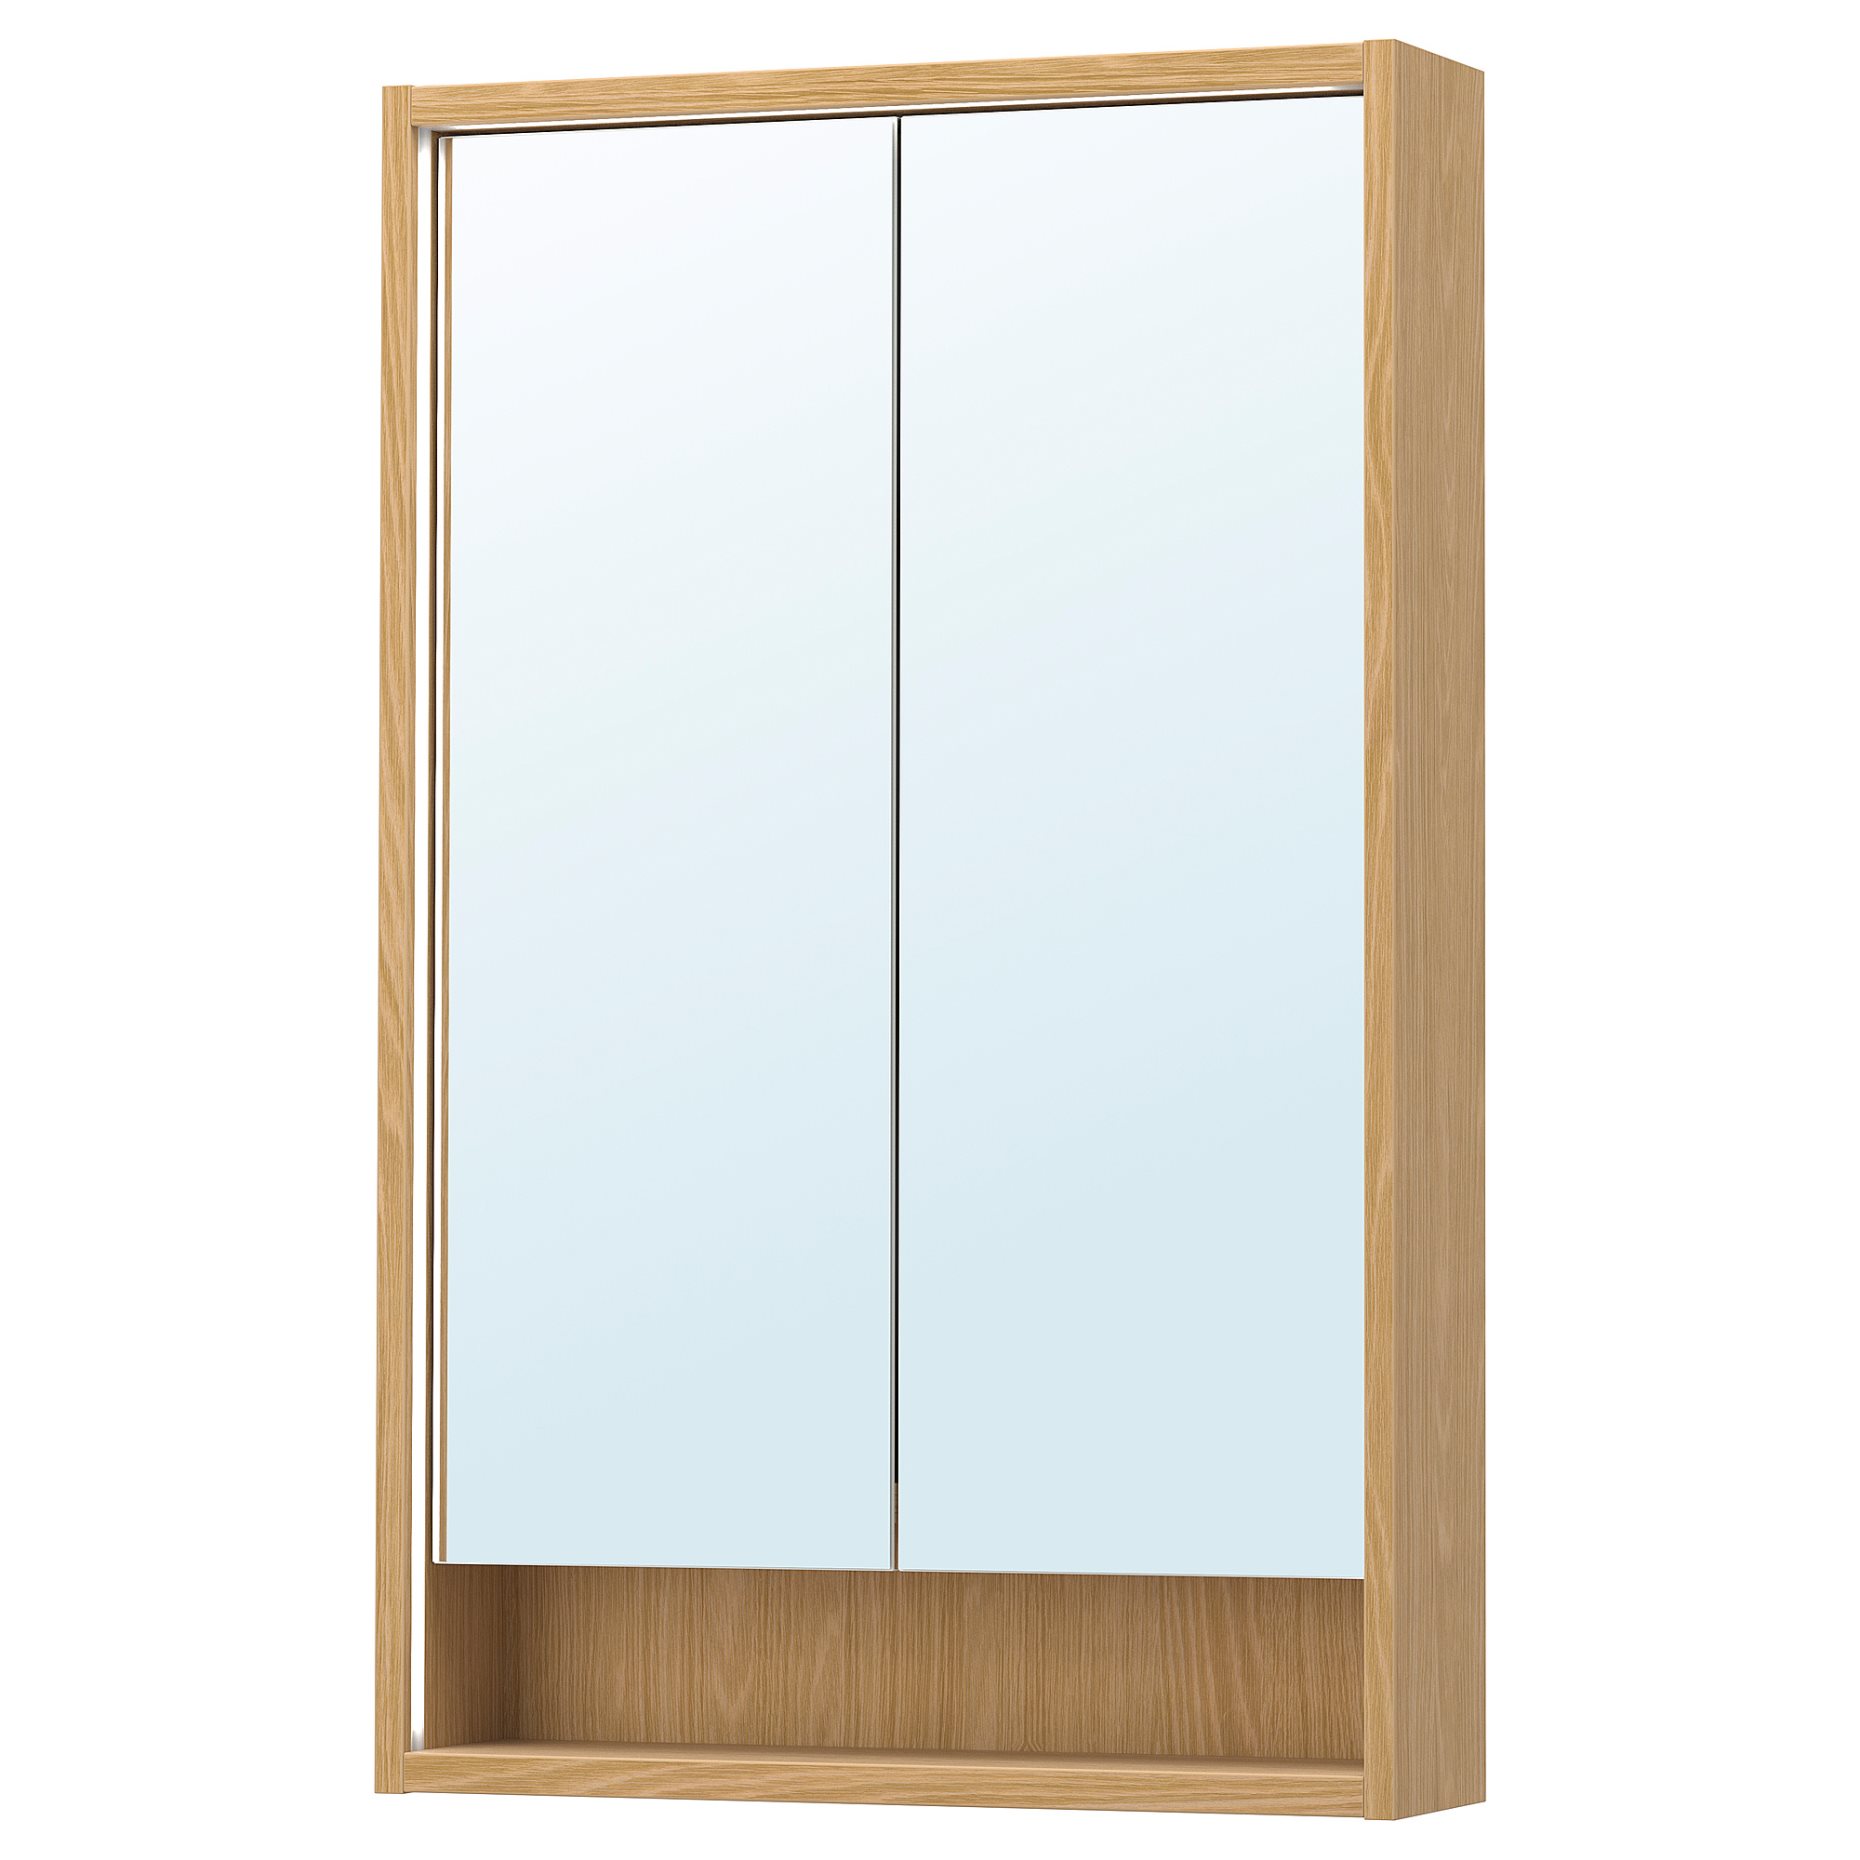 FAXALVEN, mirror cabinet with built-in lighting, 60x15x95 cm, 095.167.11